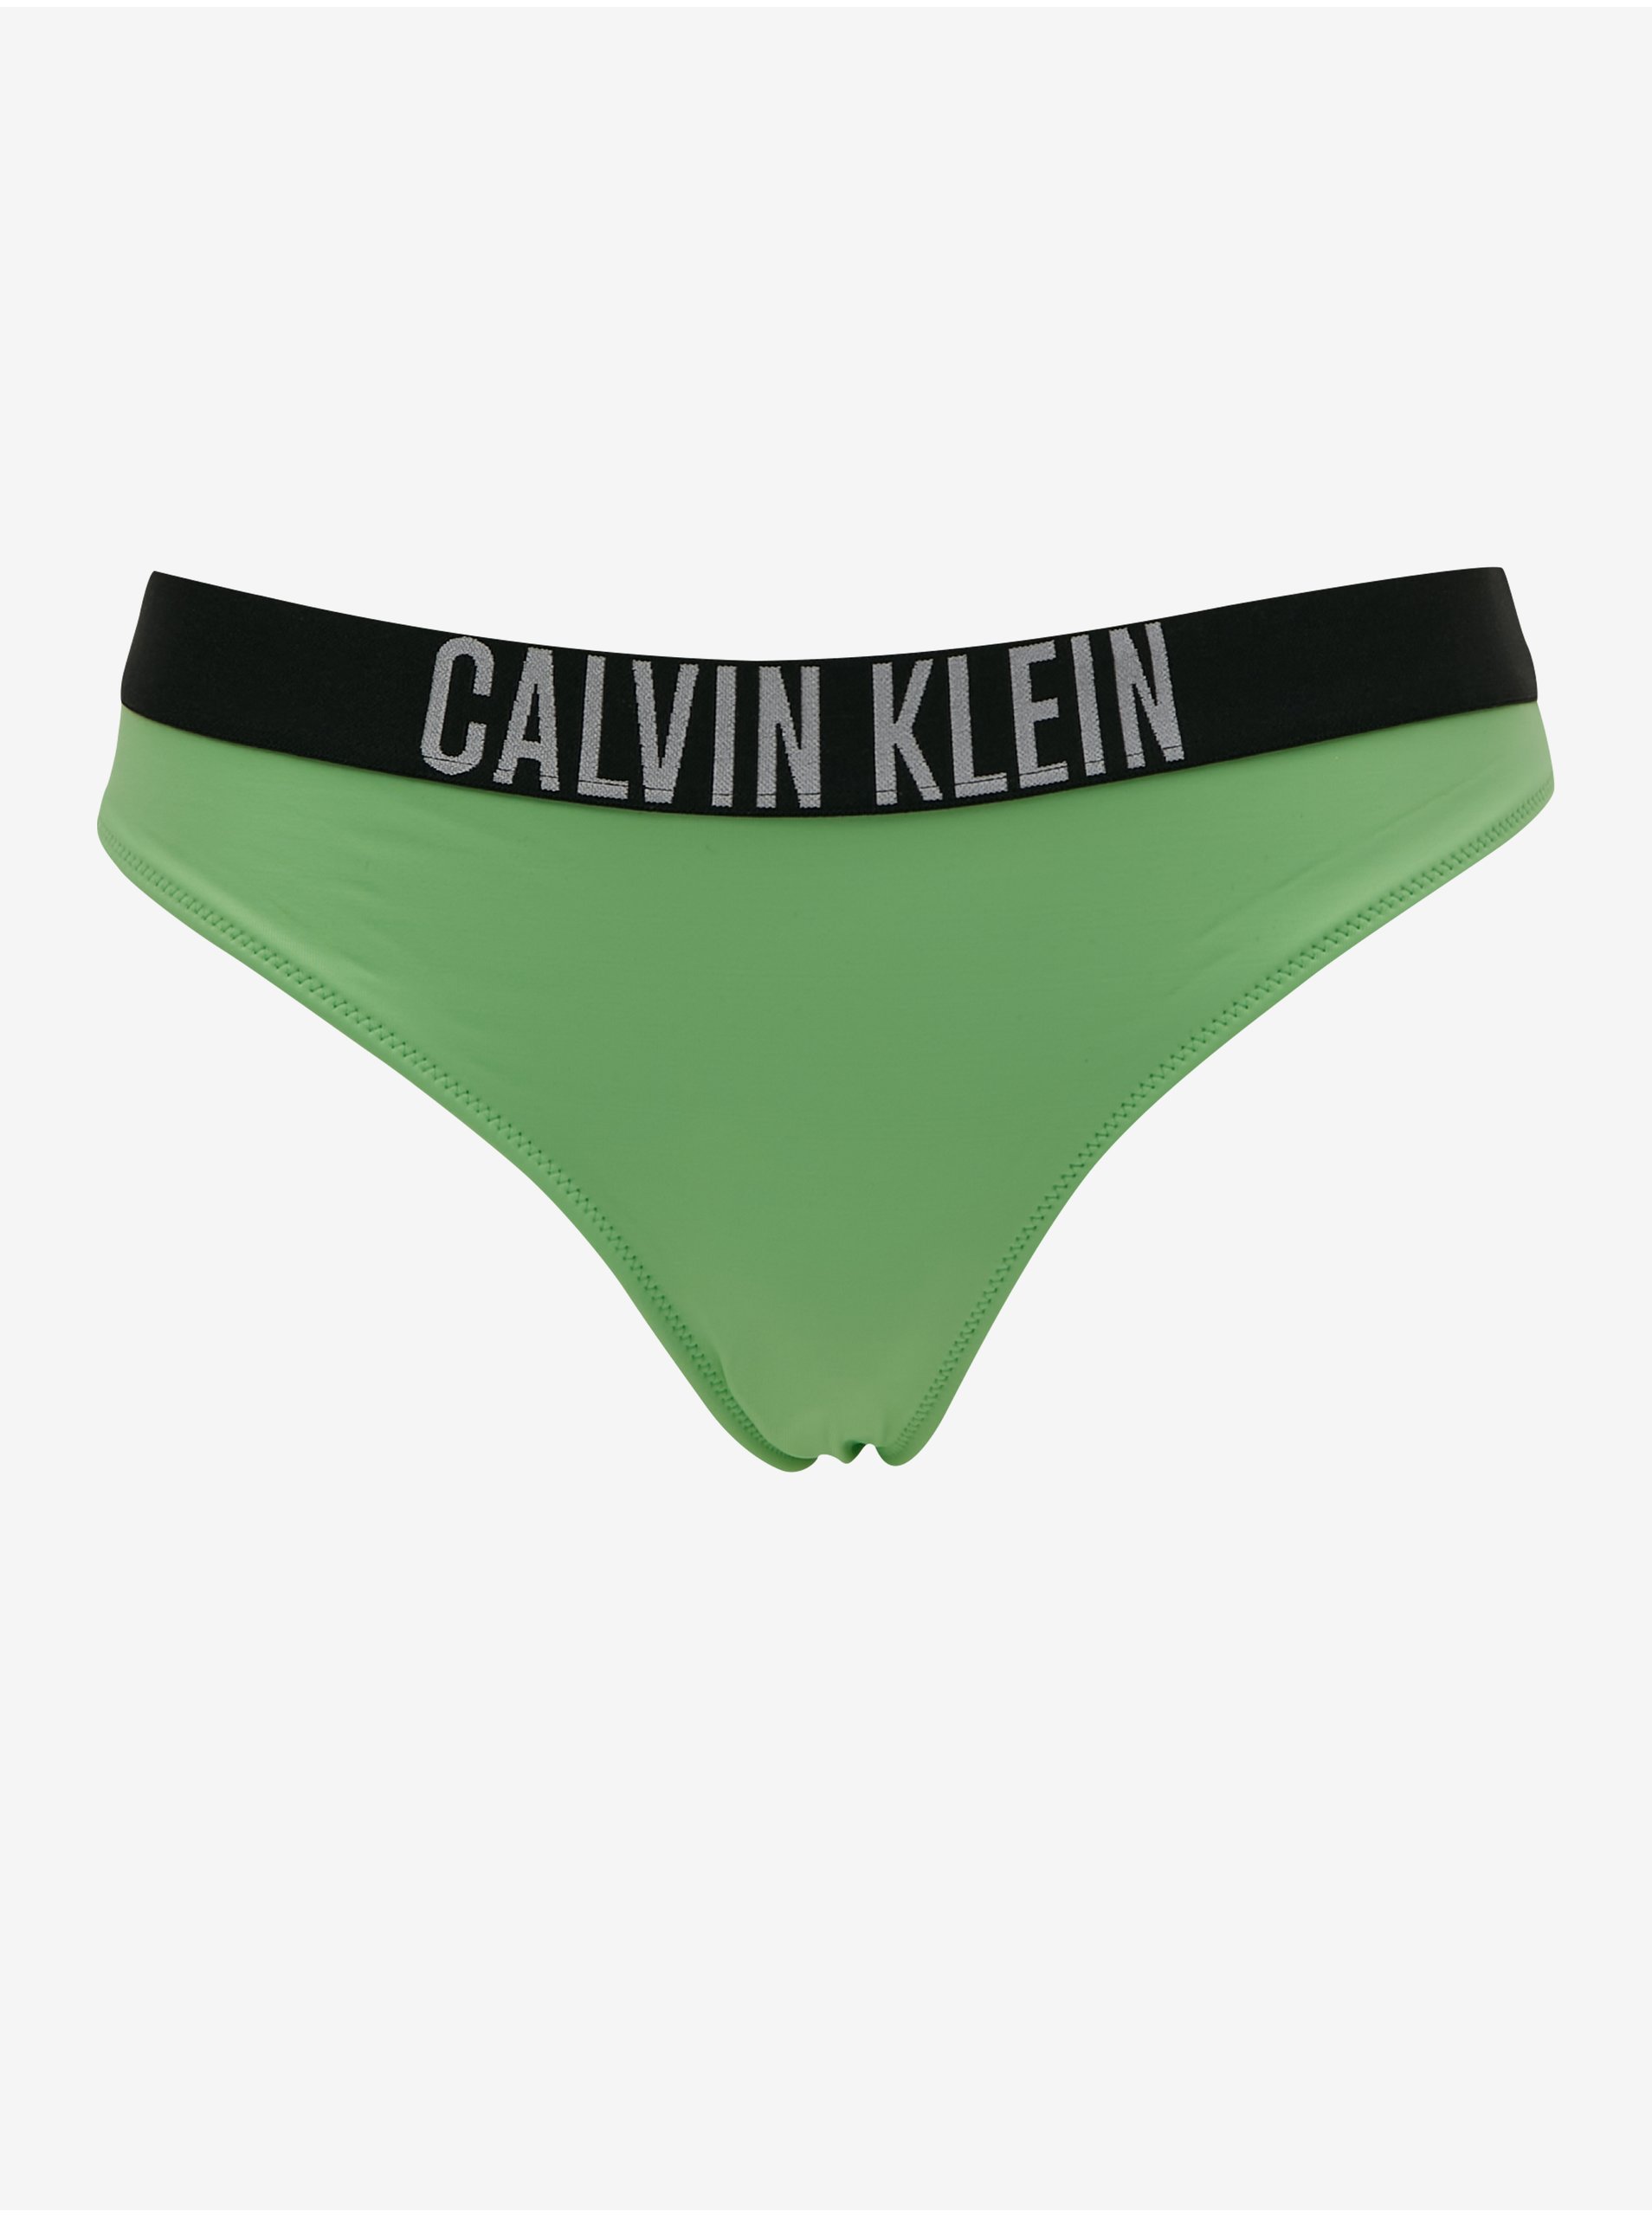 Lacno Zelený dámsky spodný diel plaviek Calvin Klein Underwear Intense Power